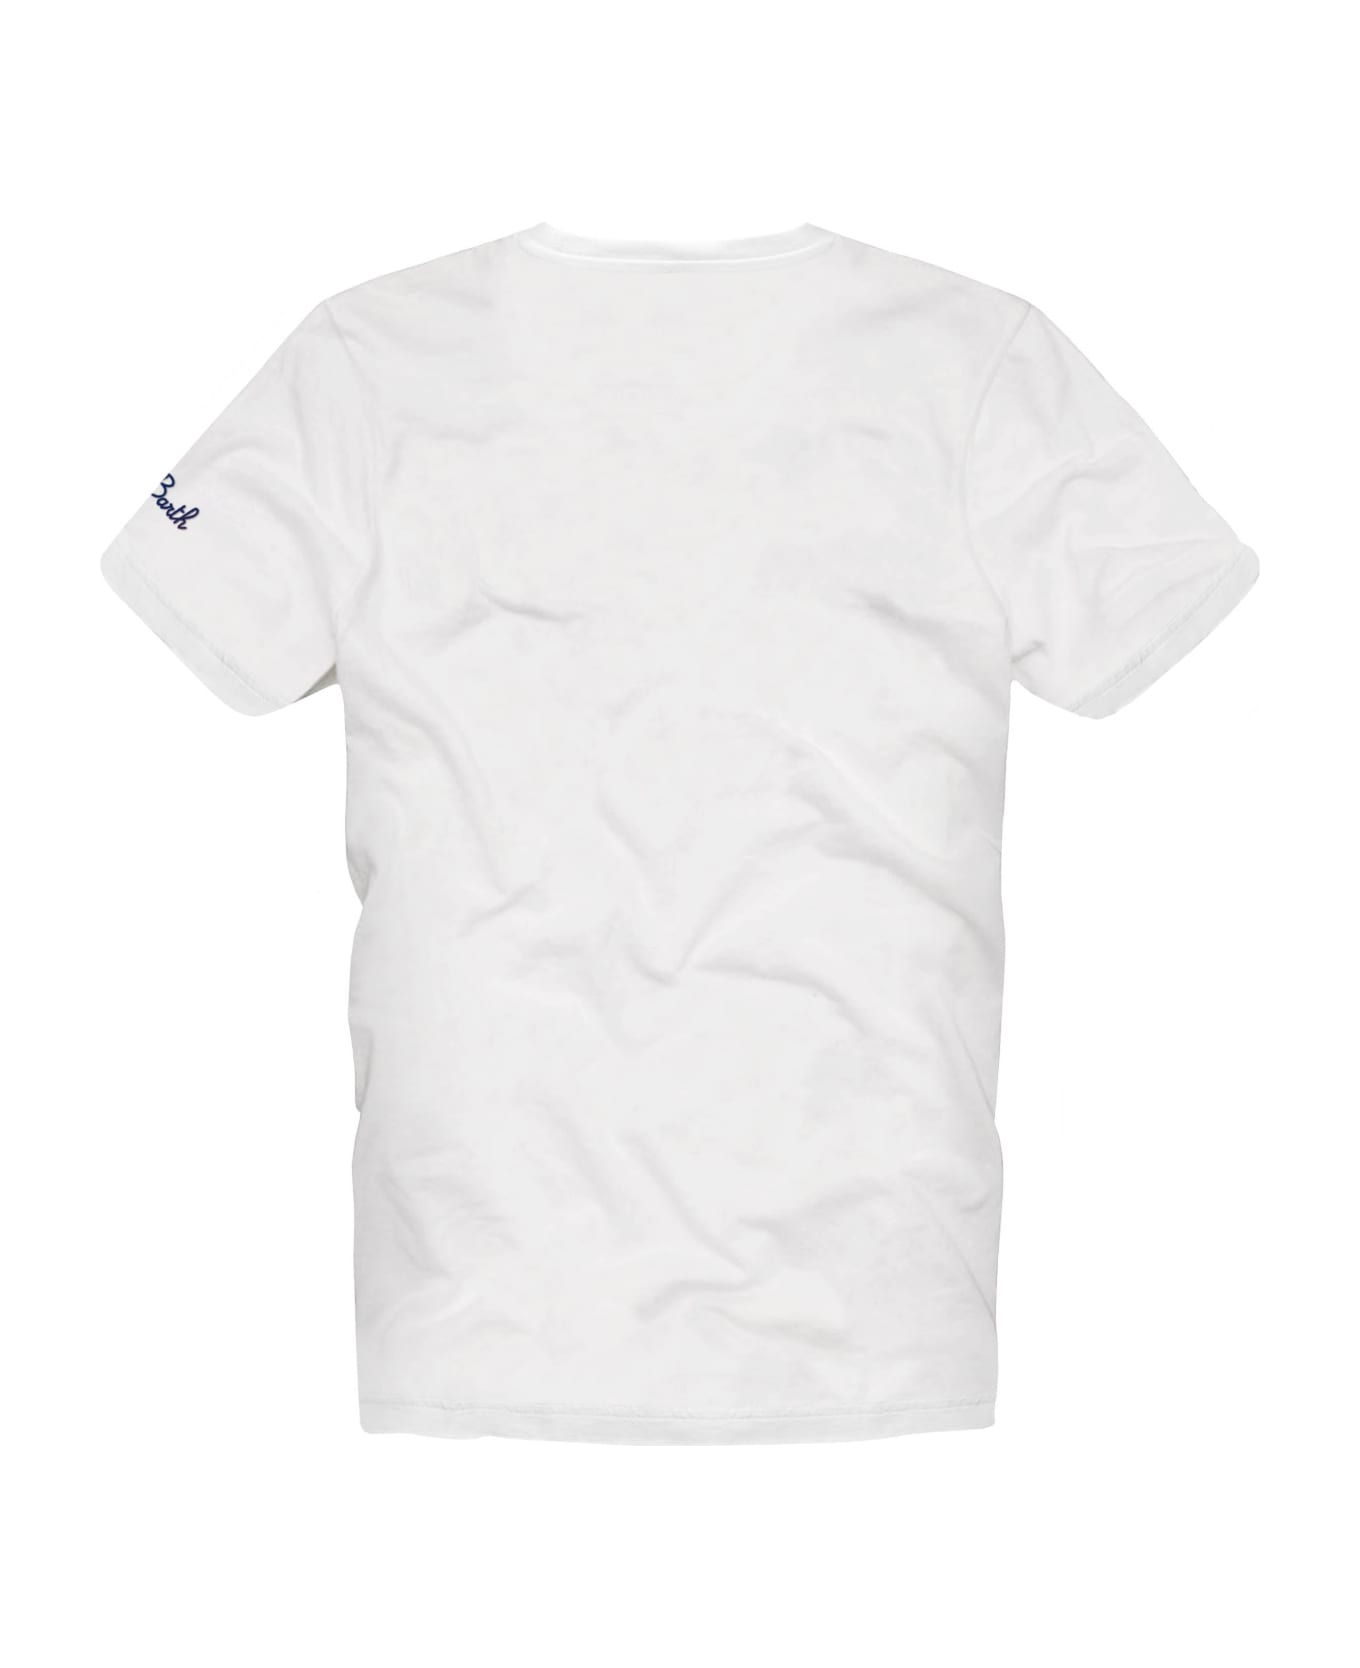 MC2 Saint Barth Man Cotton T-shirt With St. Barth Basketball Print シャツ